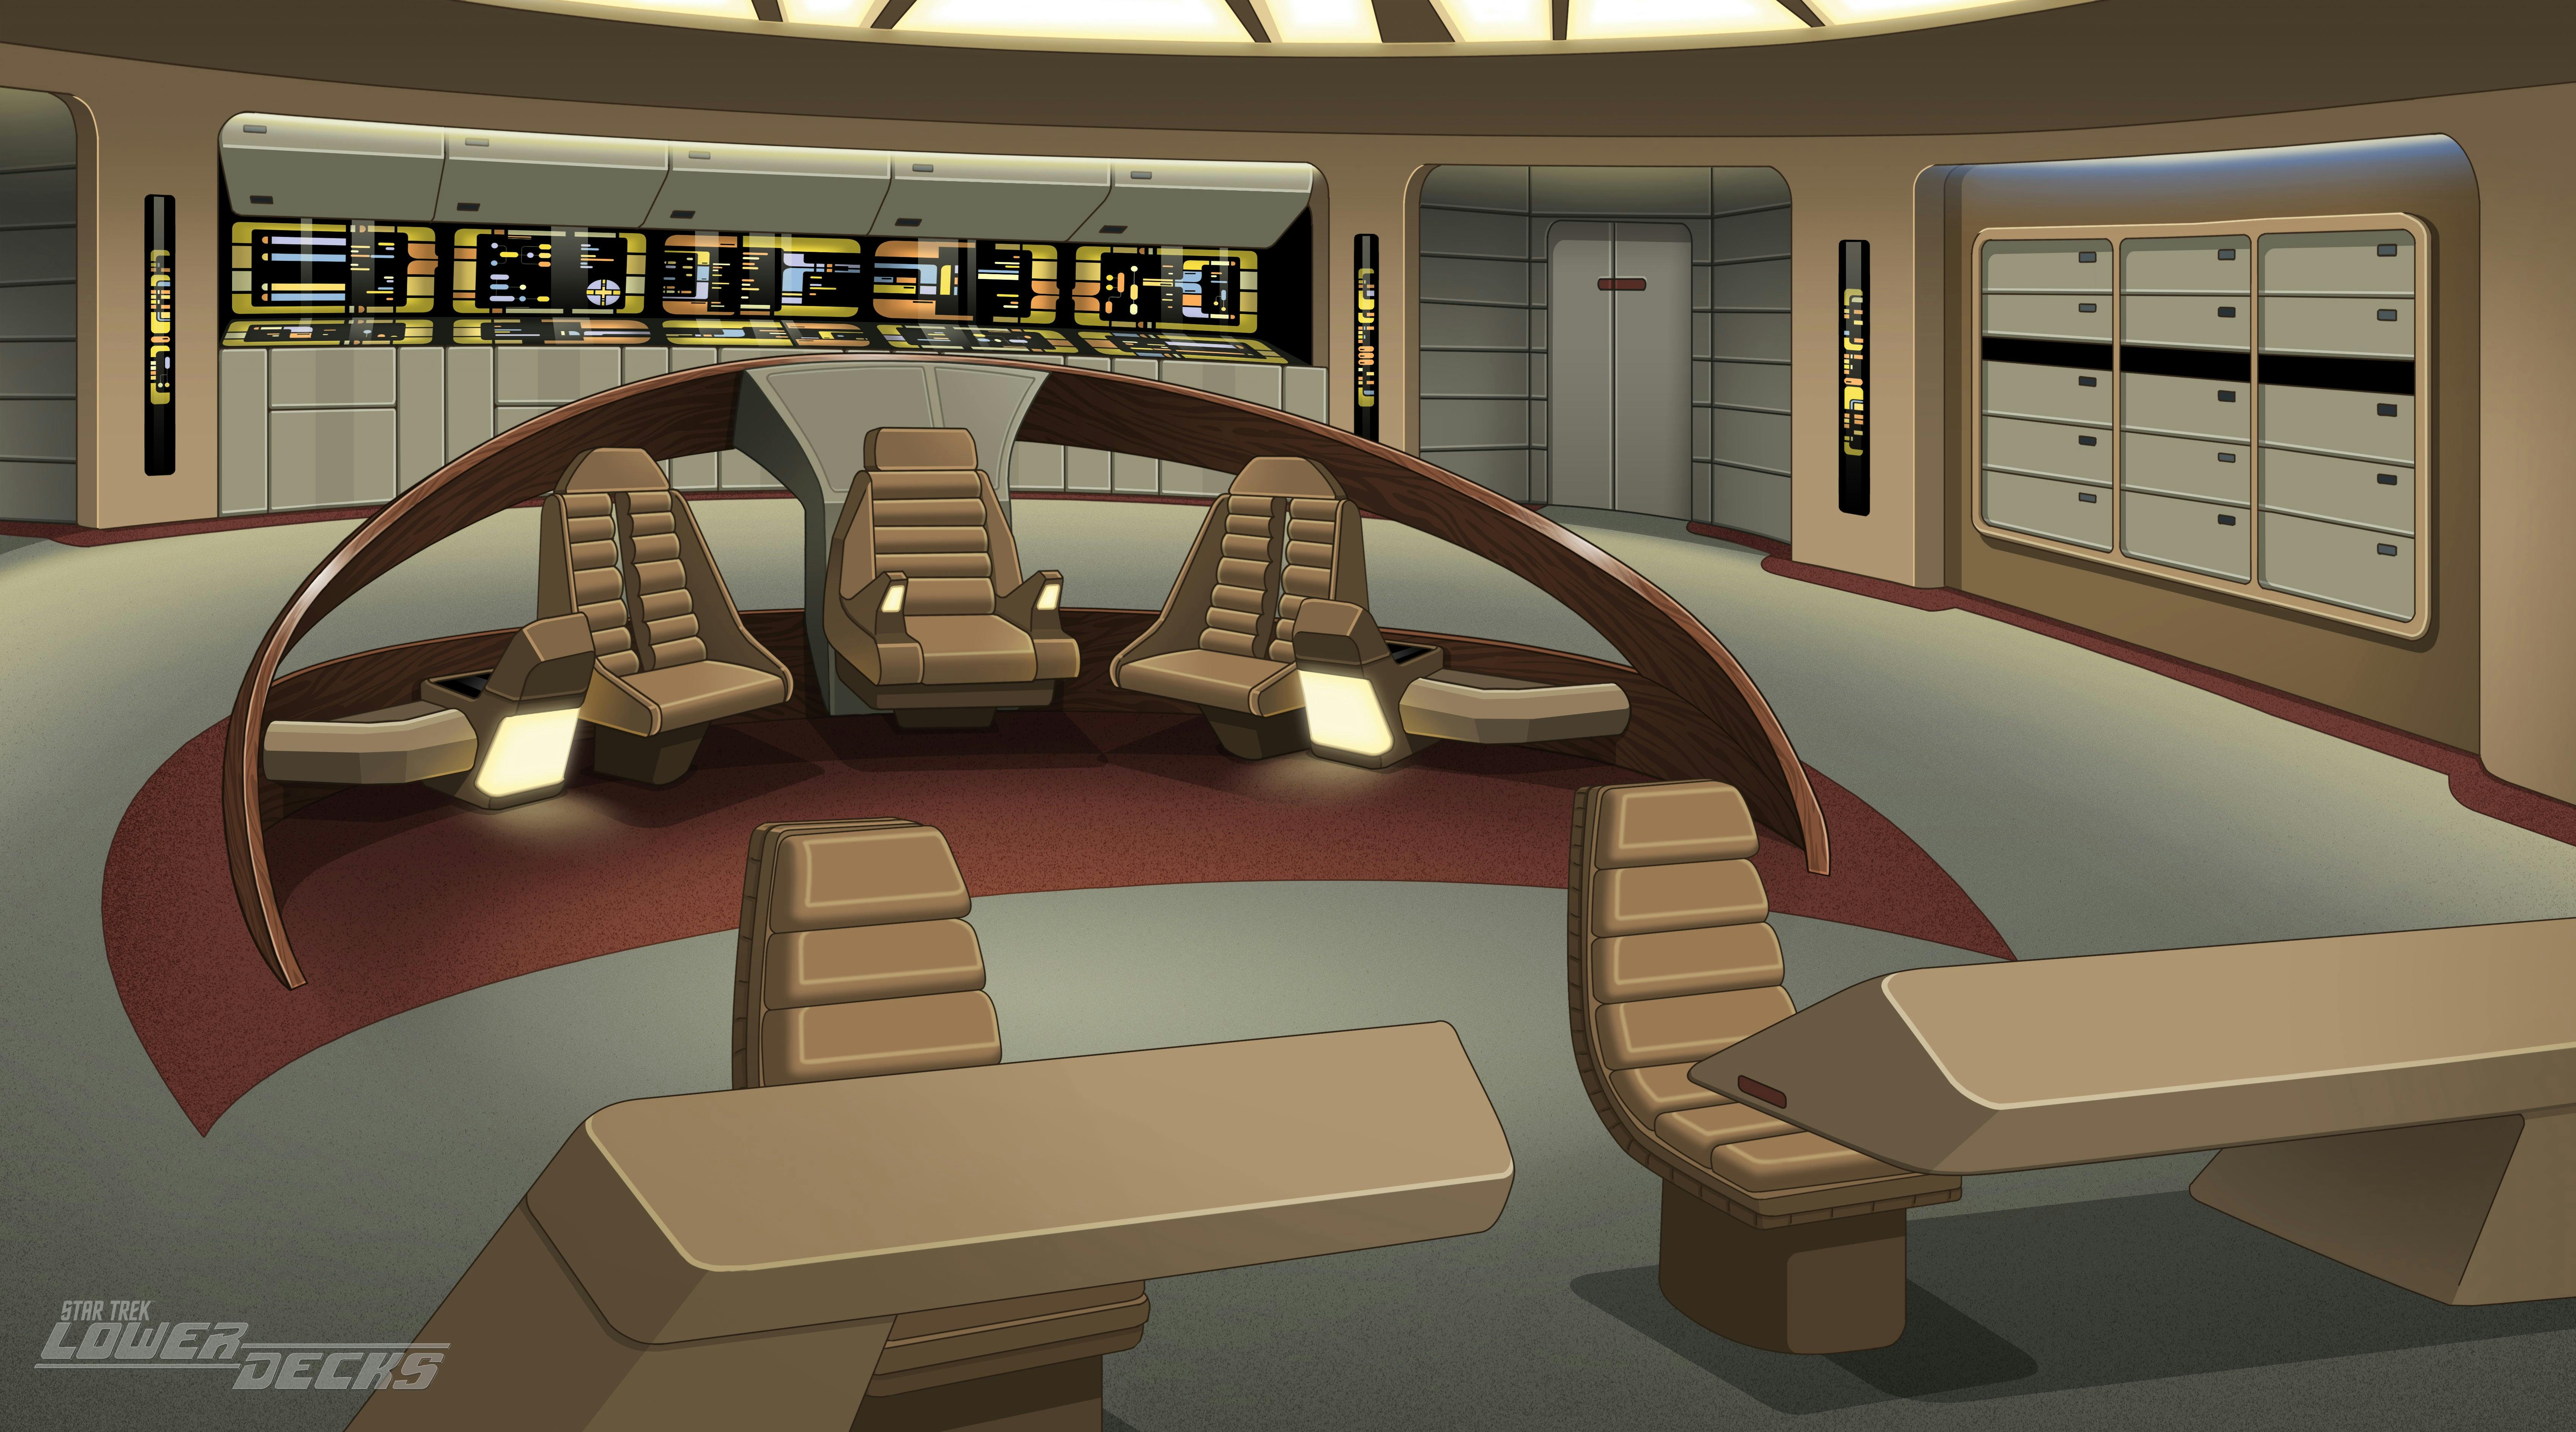 Star Trek: Lower Decks Virtual Background